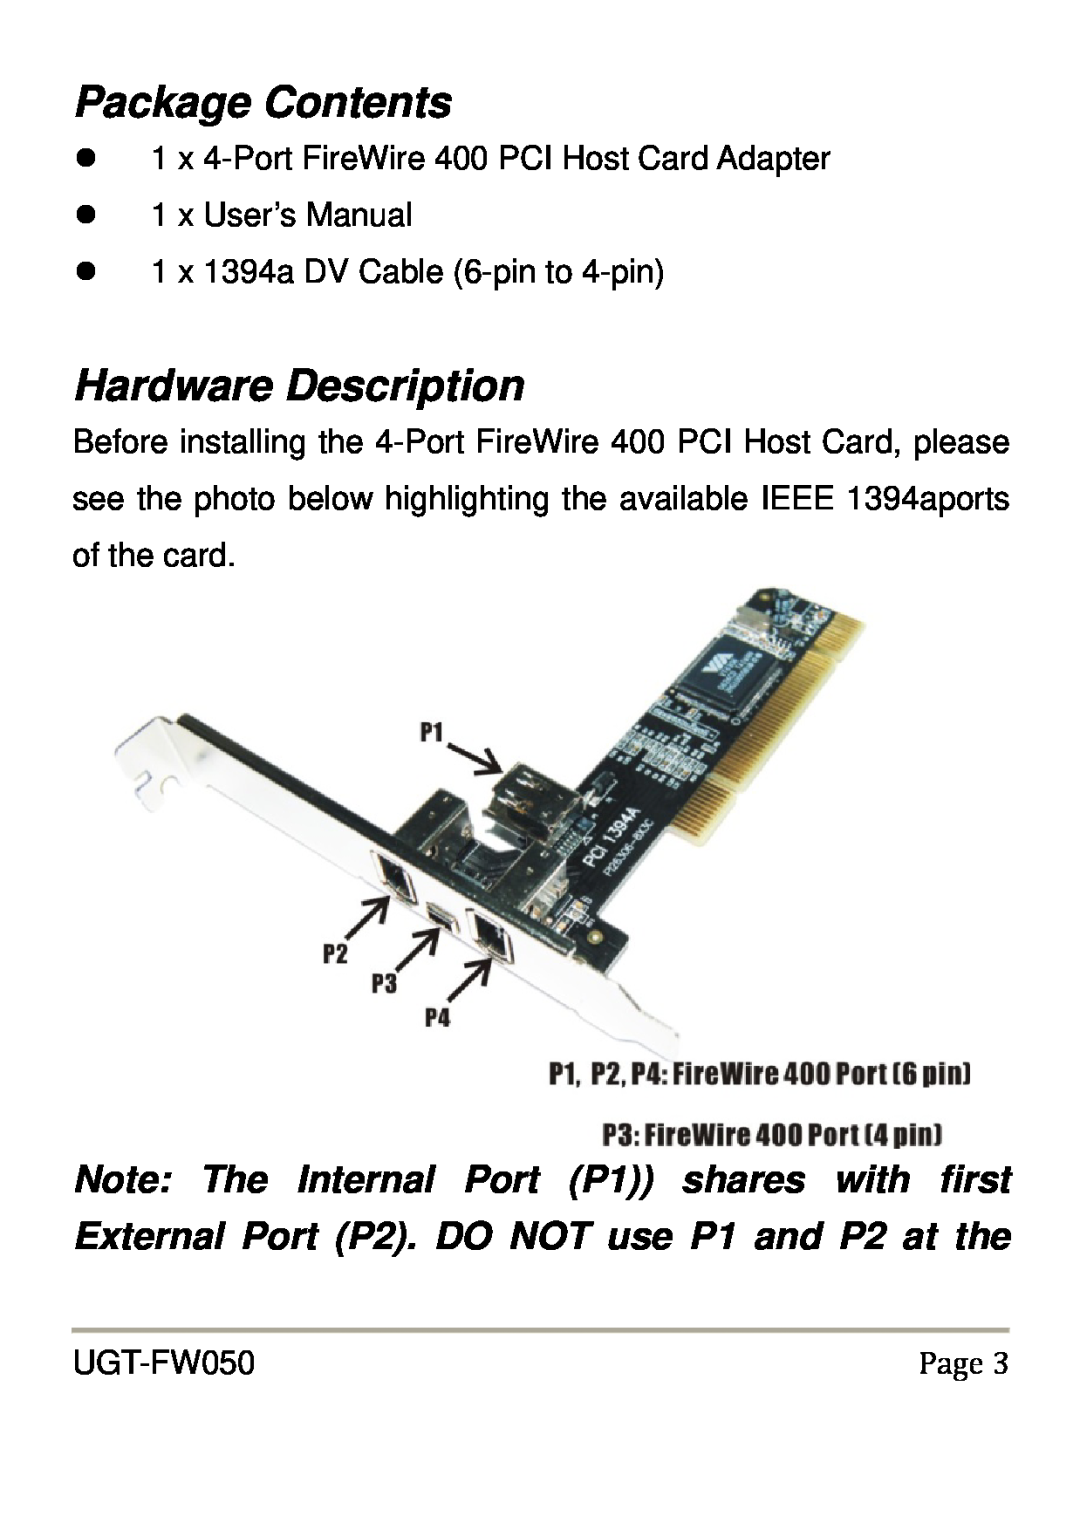 Vantec UGT-FW050 user manual Package Contents, Hardware Description, Page 